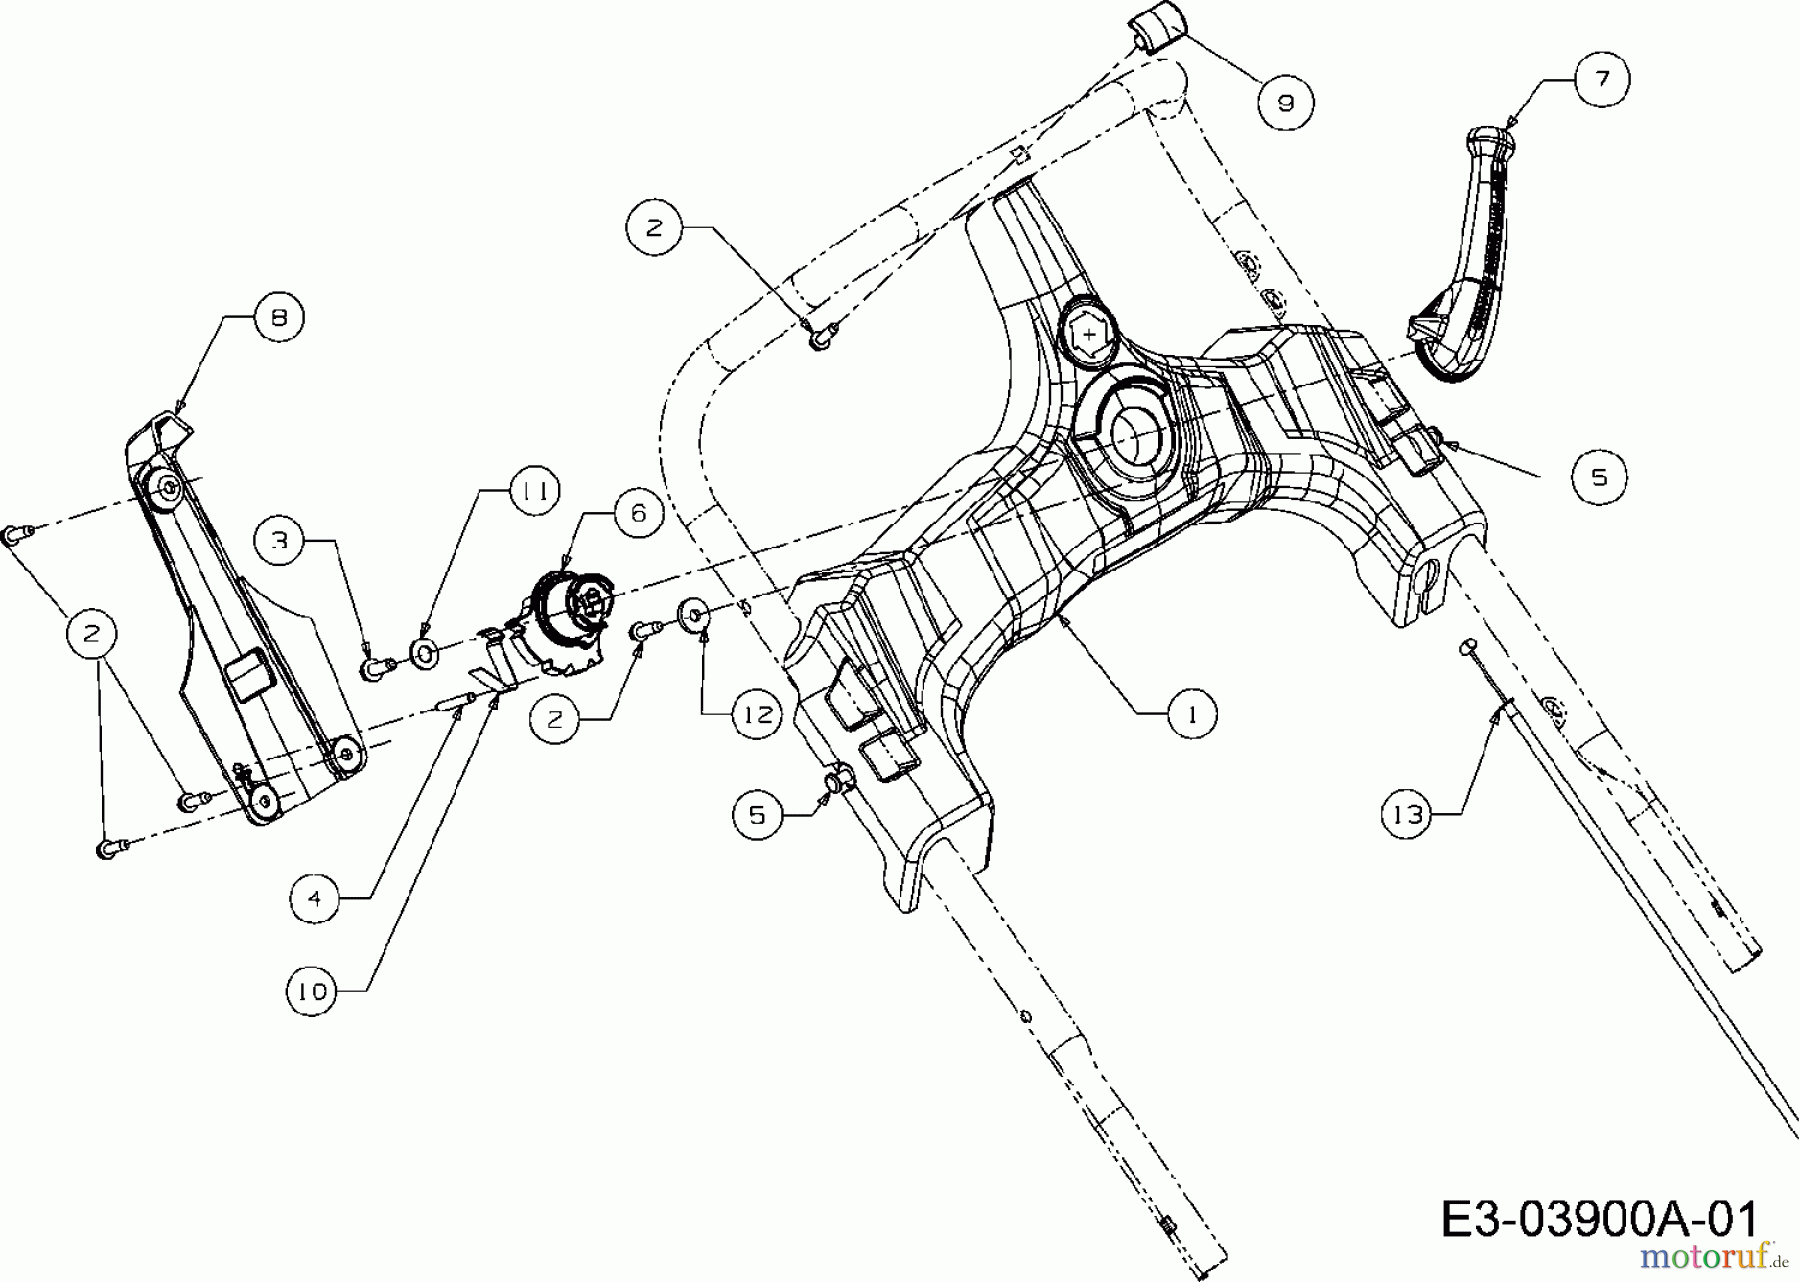  Efco Petrol mower self propelled LR 55 12AI868F637  (2010) Panel